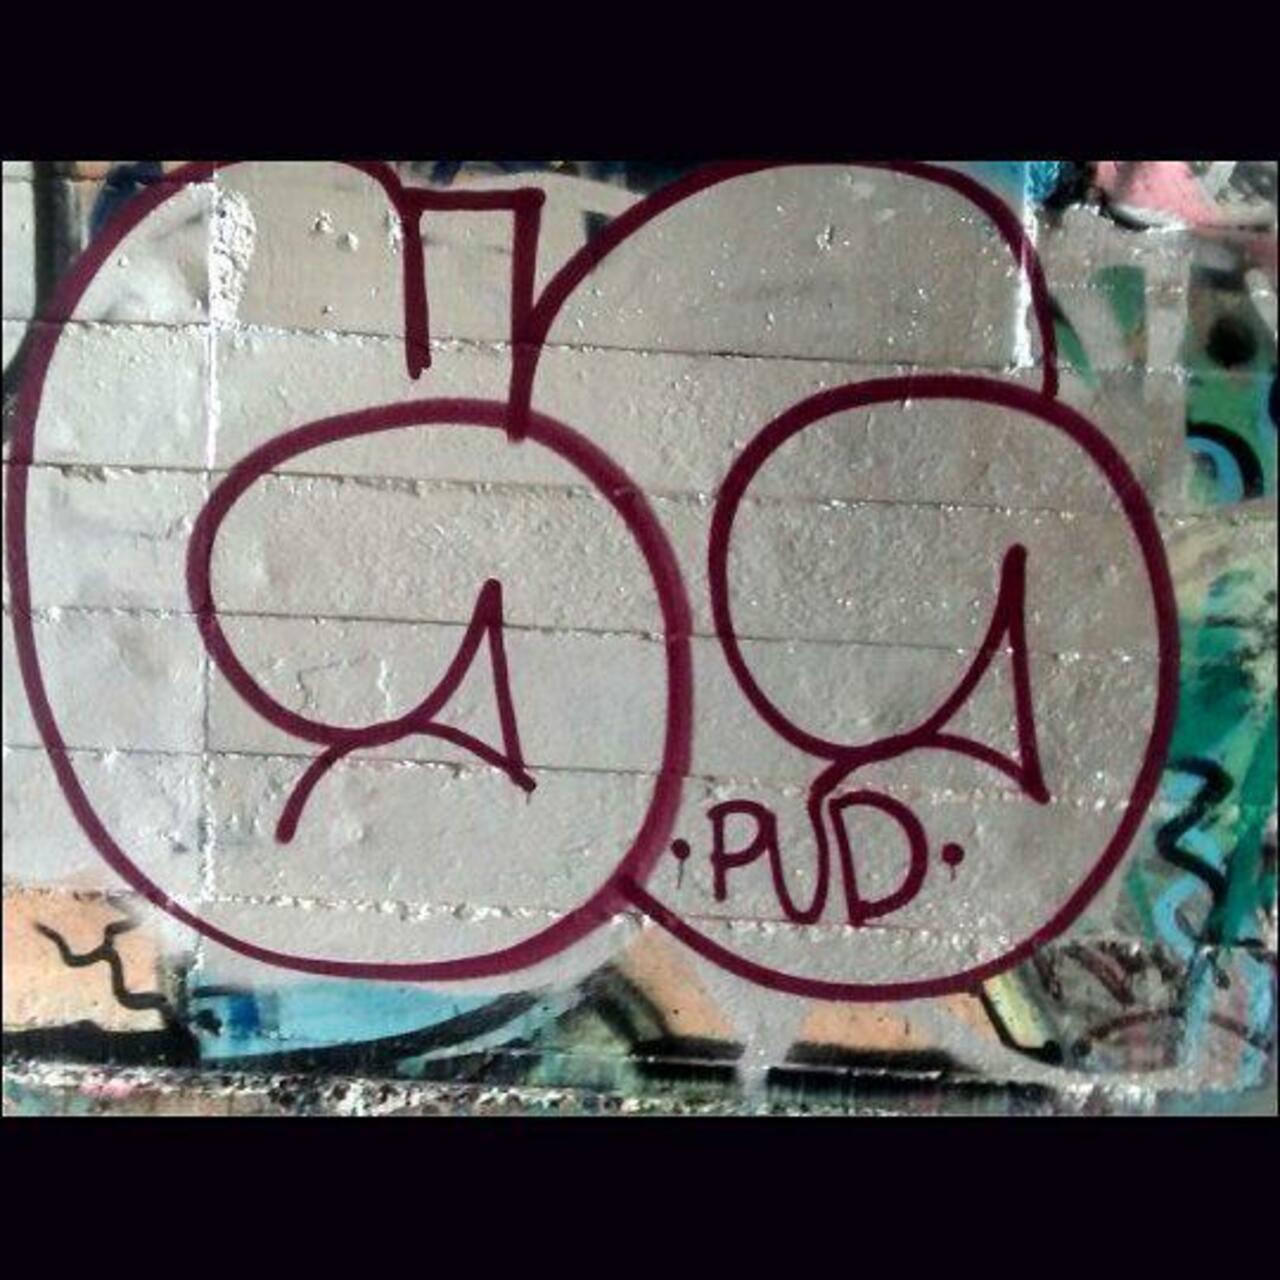 RT @artpushr: via #croshone "http://bit.ly/1JTse2u" #graffiti #streetart http://t.co/8mYKFJa3ml